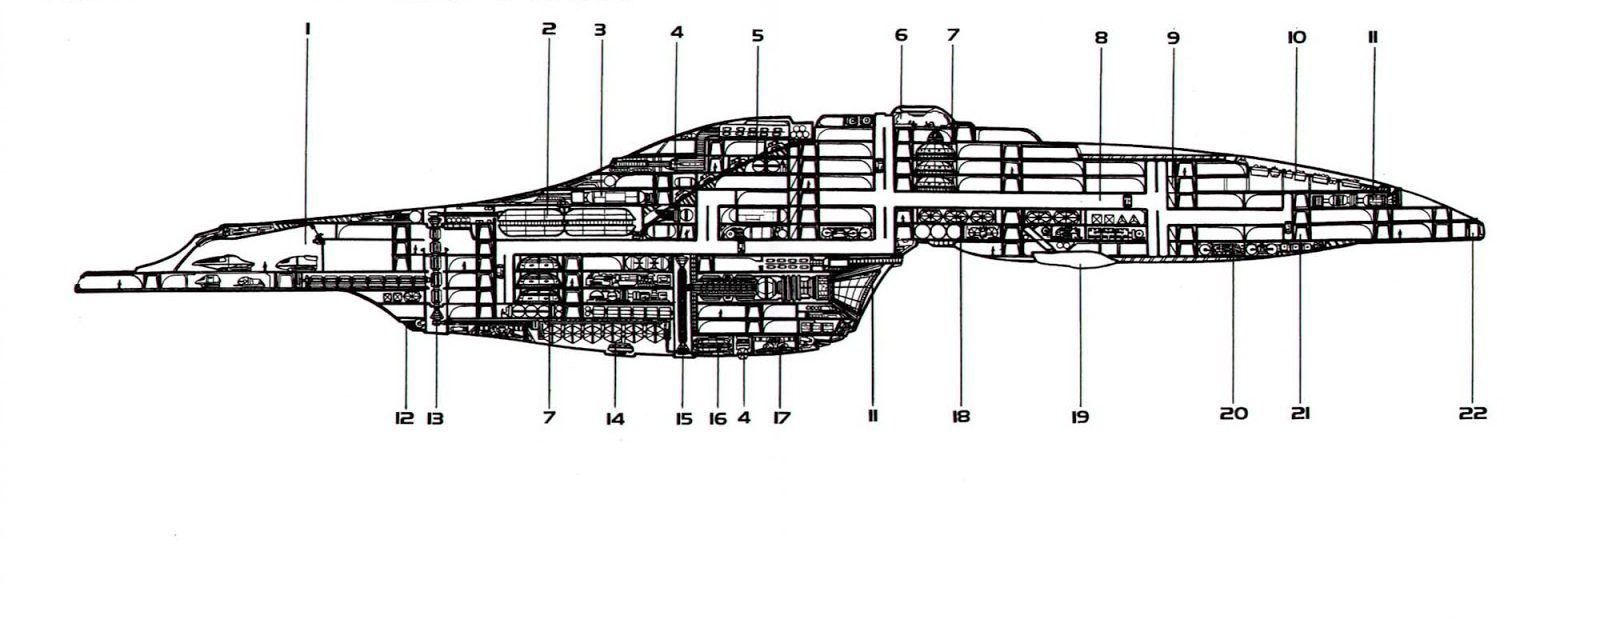 Voyager deck listing